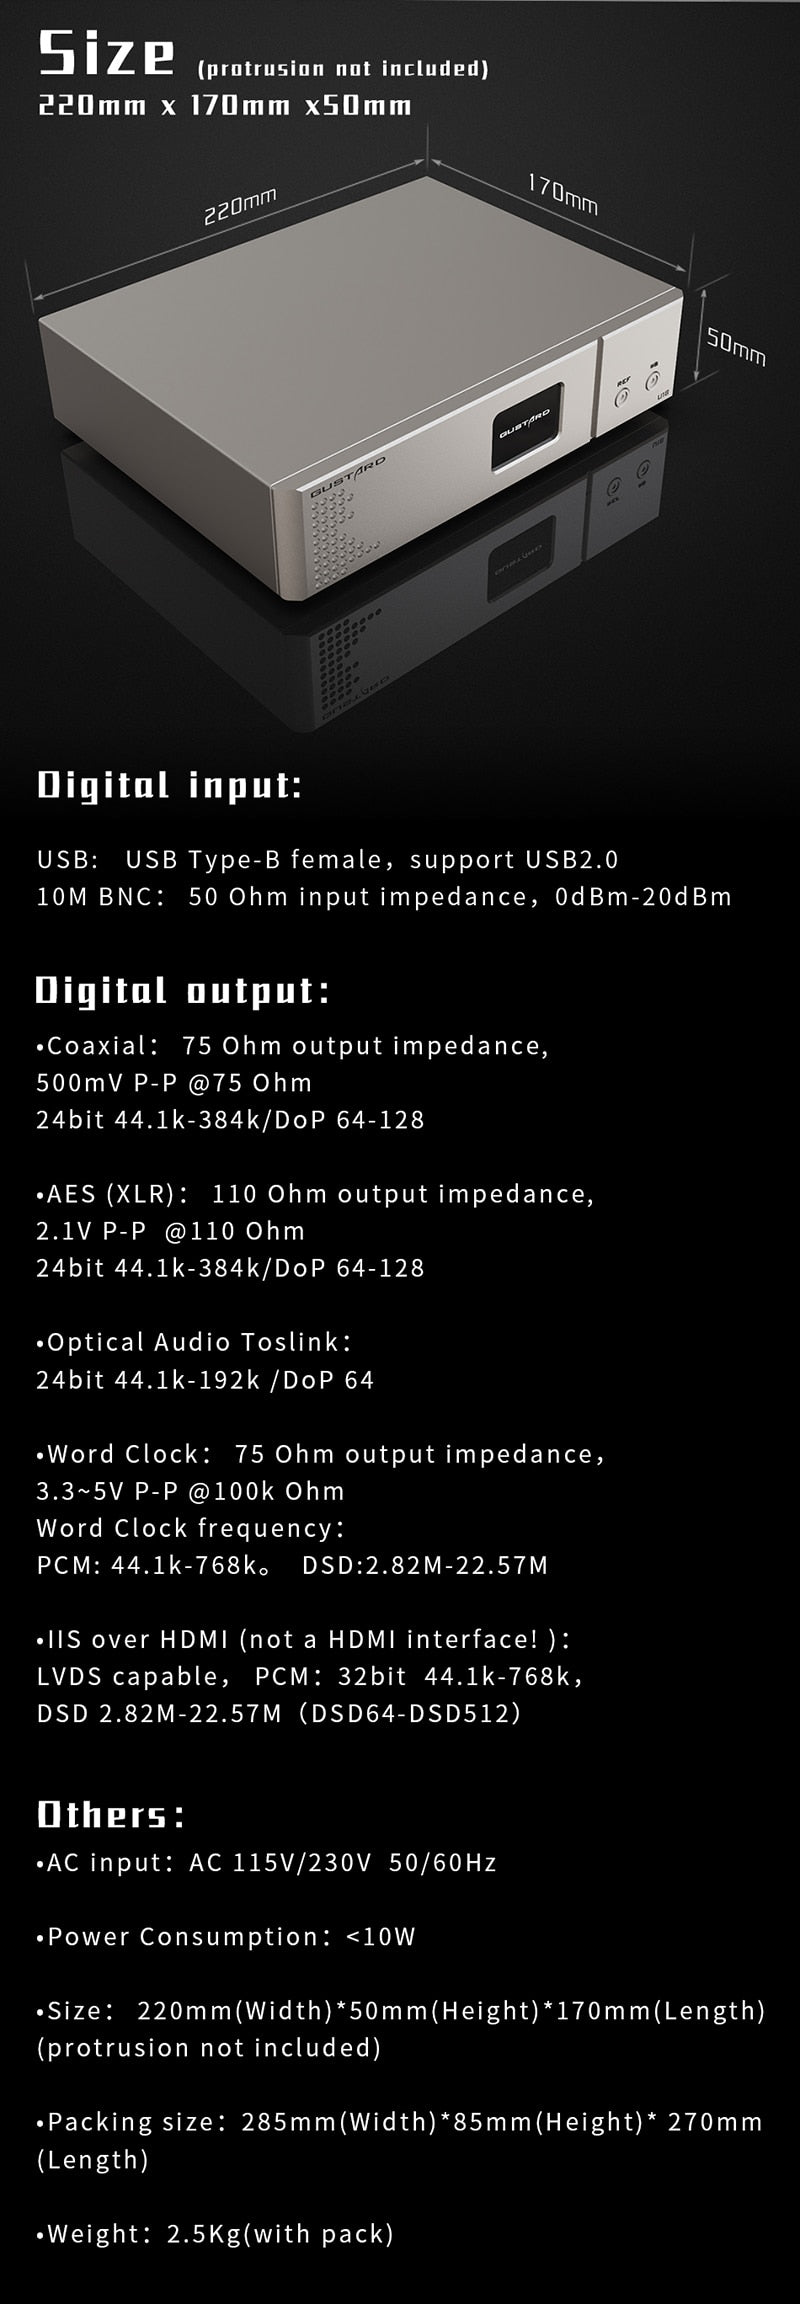 Gustard U18 New Generation of High-performance USB Audio Interface XMOS XU216 DSD512 PCM768kHz HI-END Audio Interface IIS Pinout - The HiFi Cat